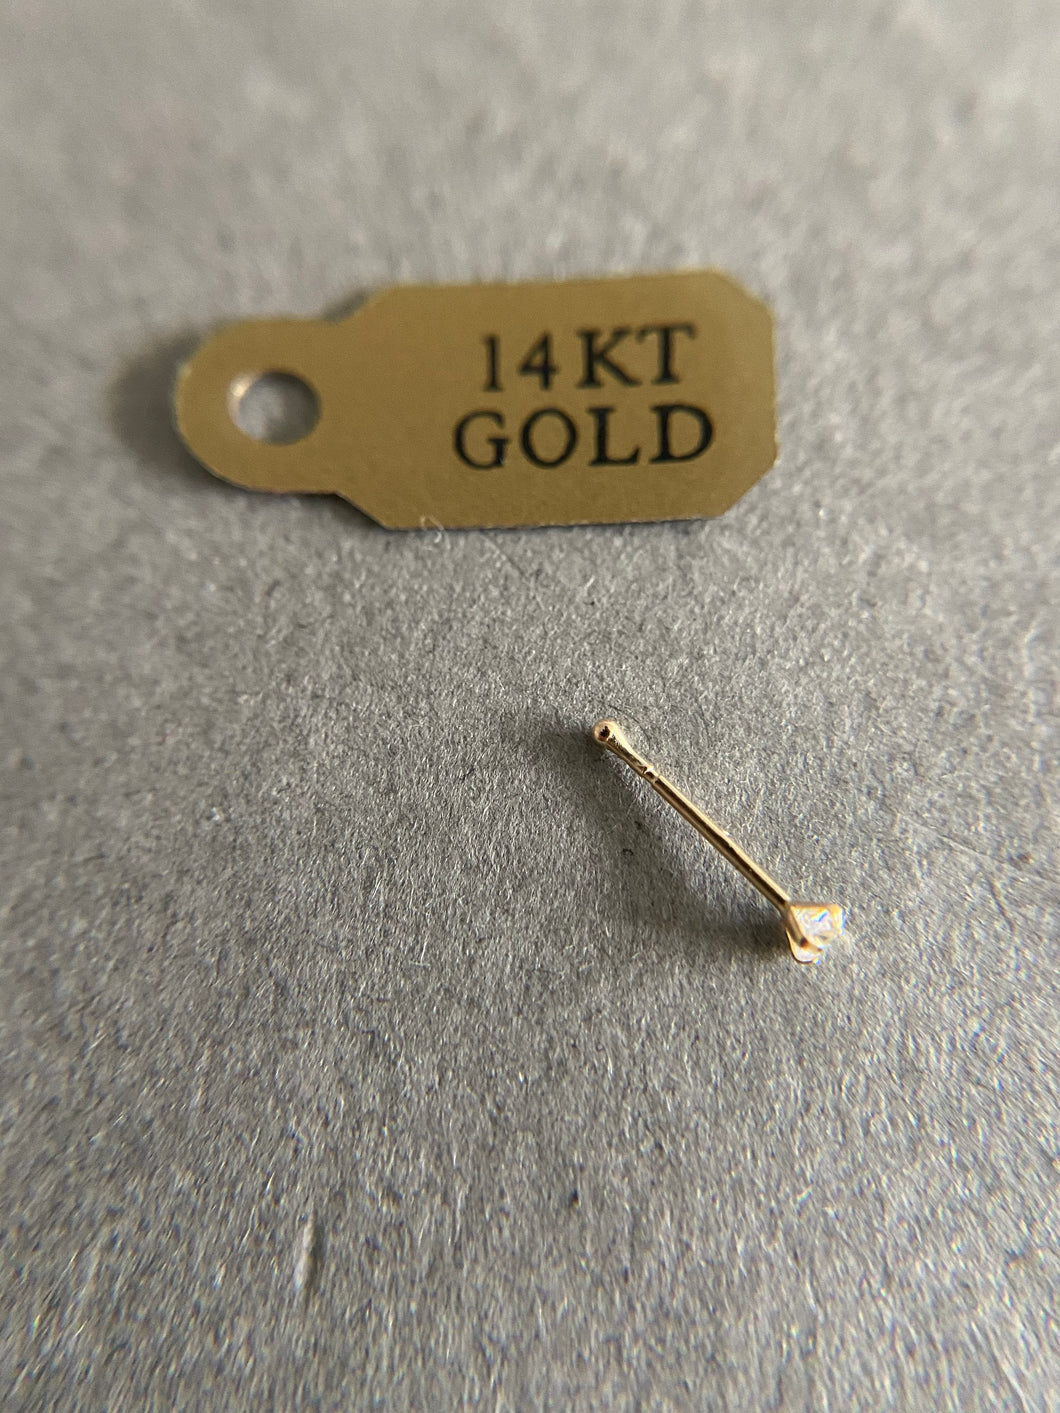 14K Solid Gold CZ Bone Nose Studs - 2mm